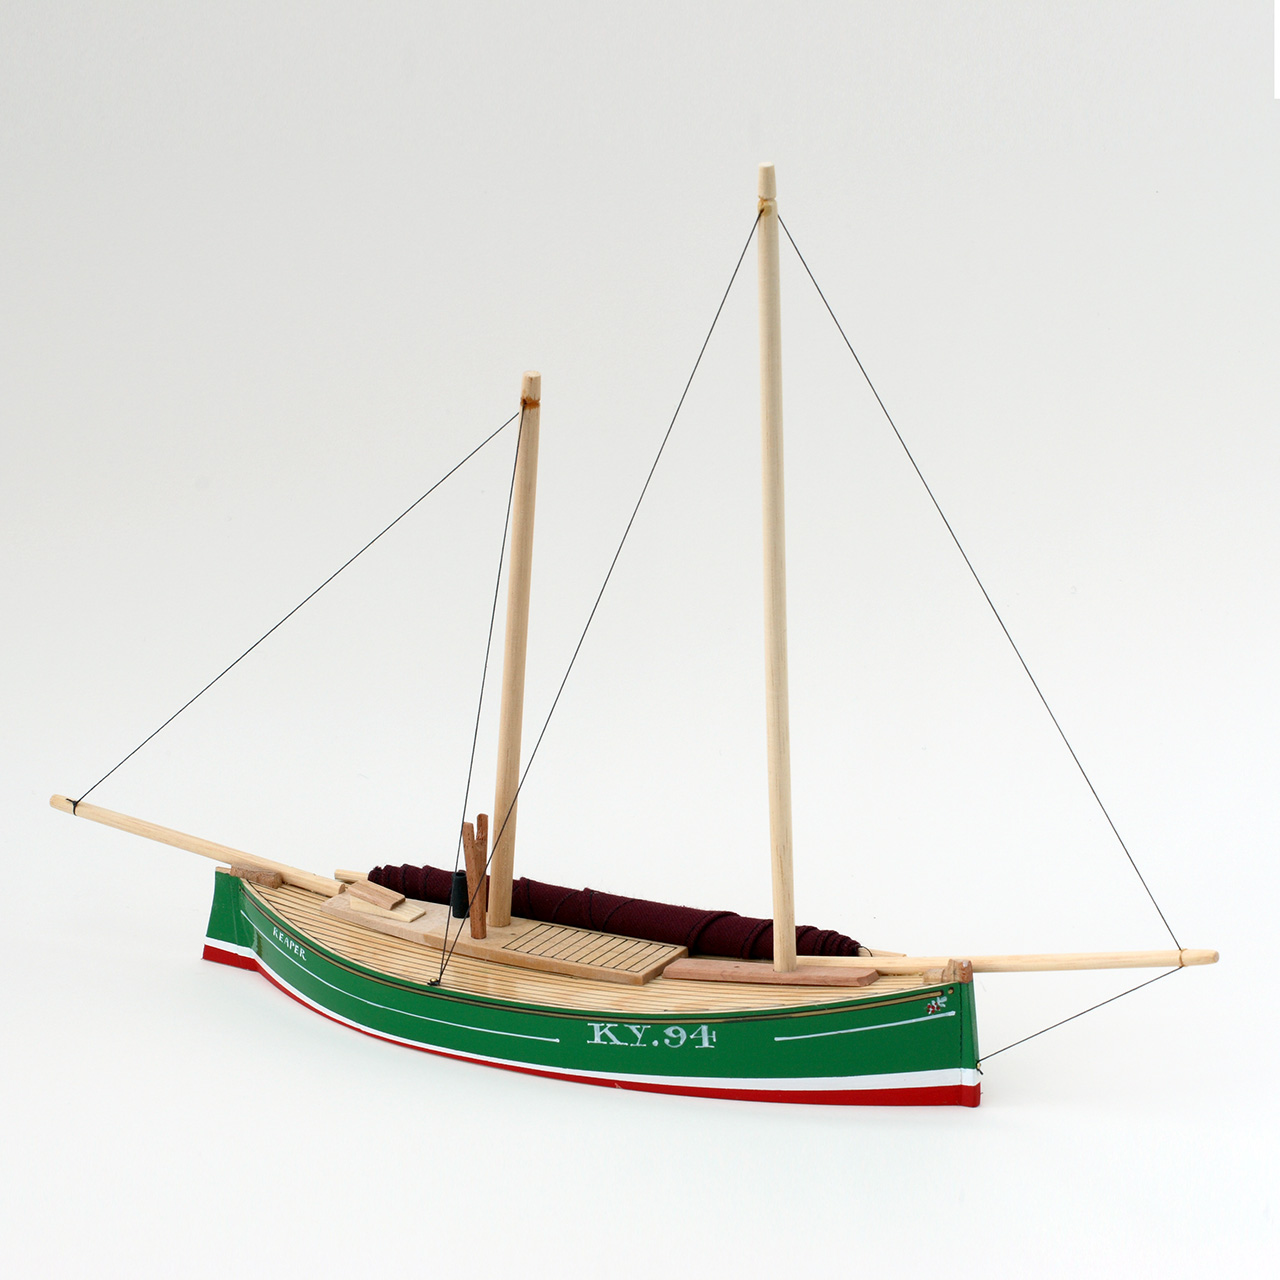 ‘FIFIE’ Type Sail Herring Drifter, circa 1880